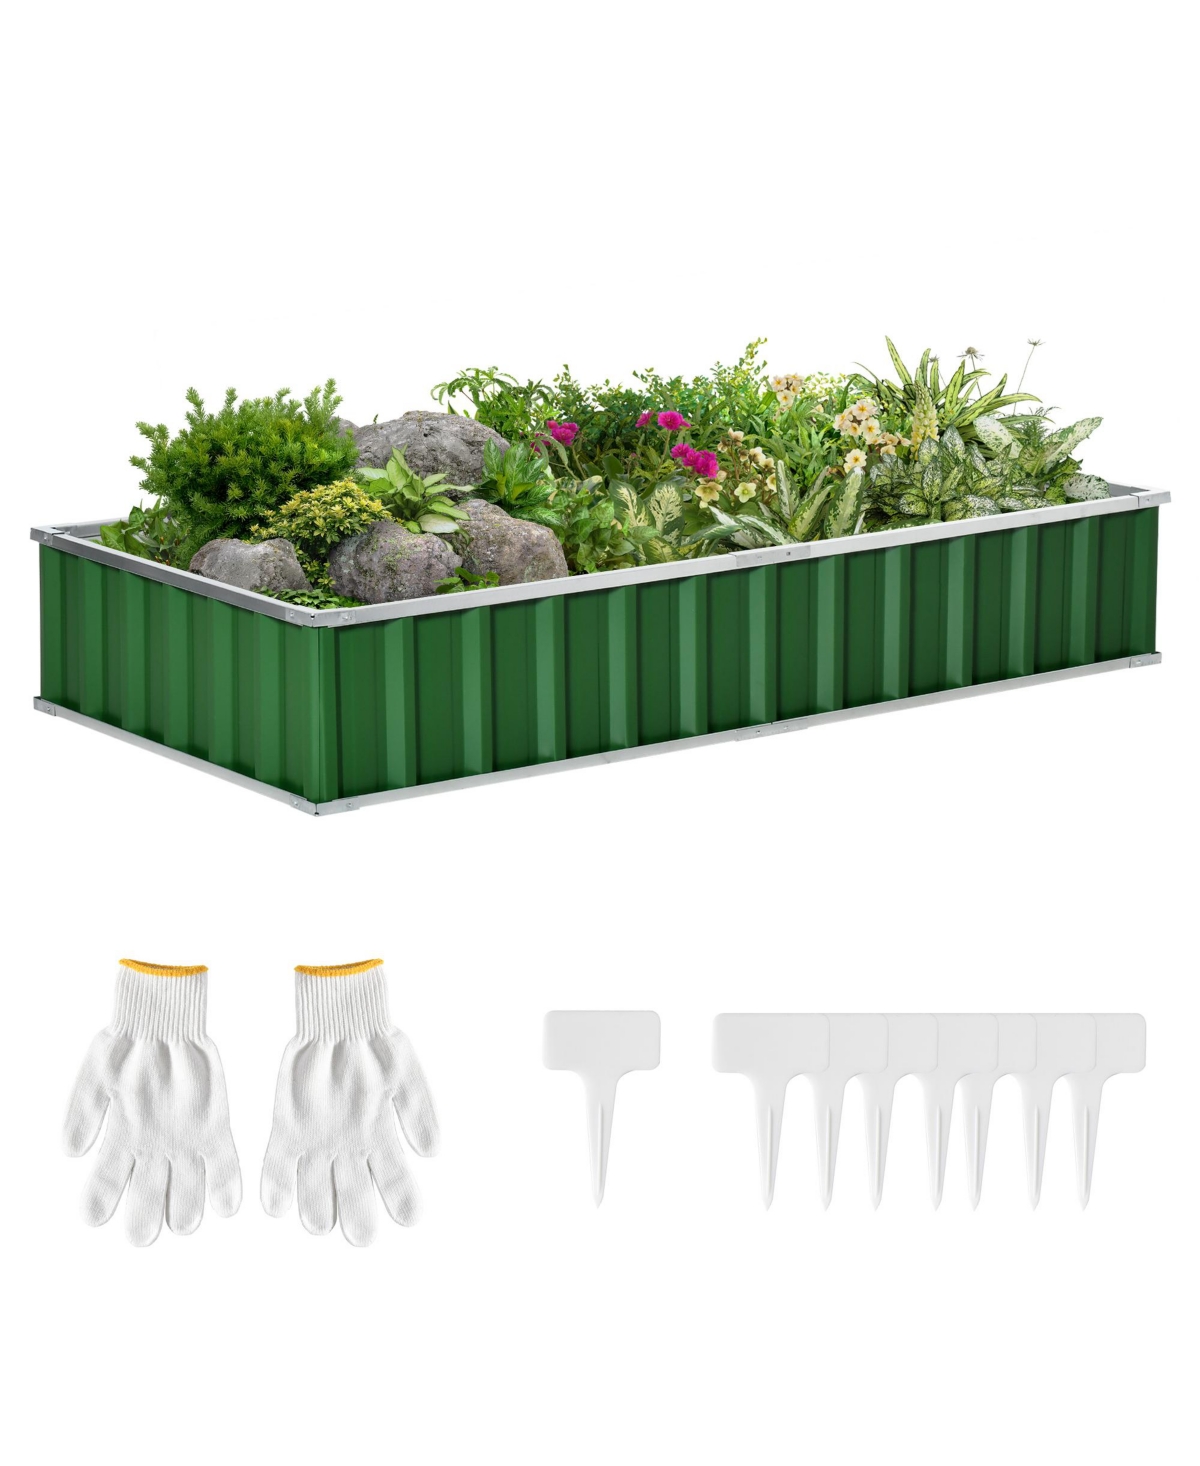 69" x 36" Metal Raised Garden Bed, Diy Planter Box - Green